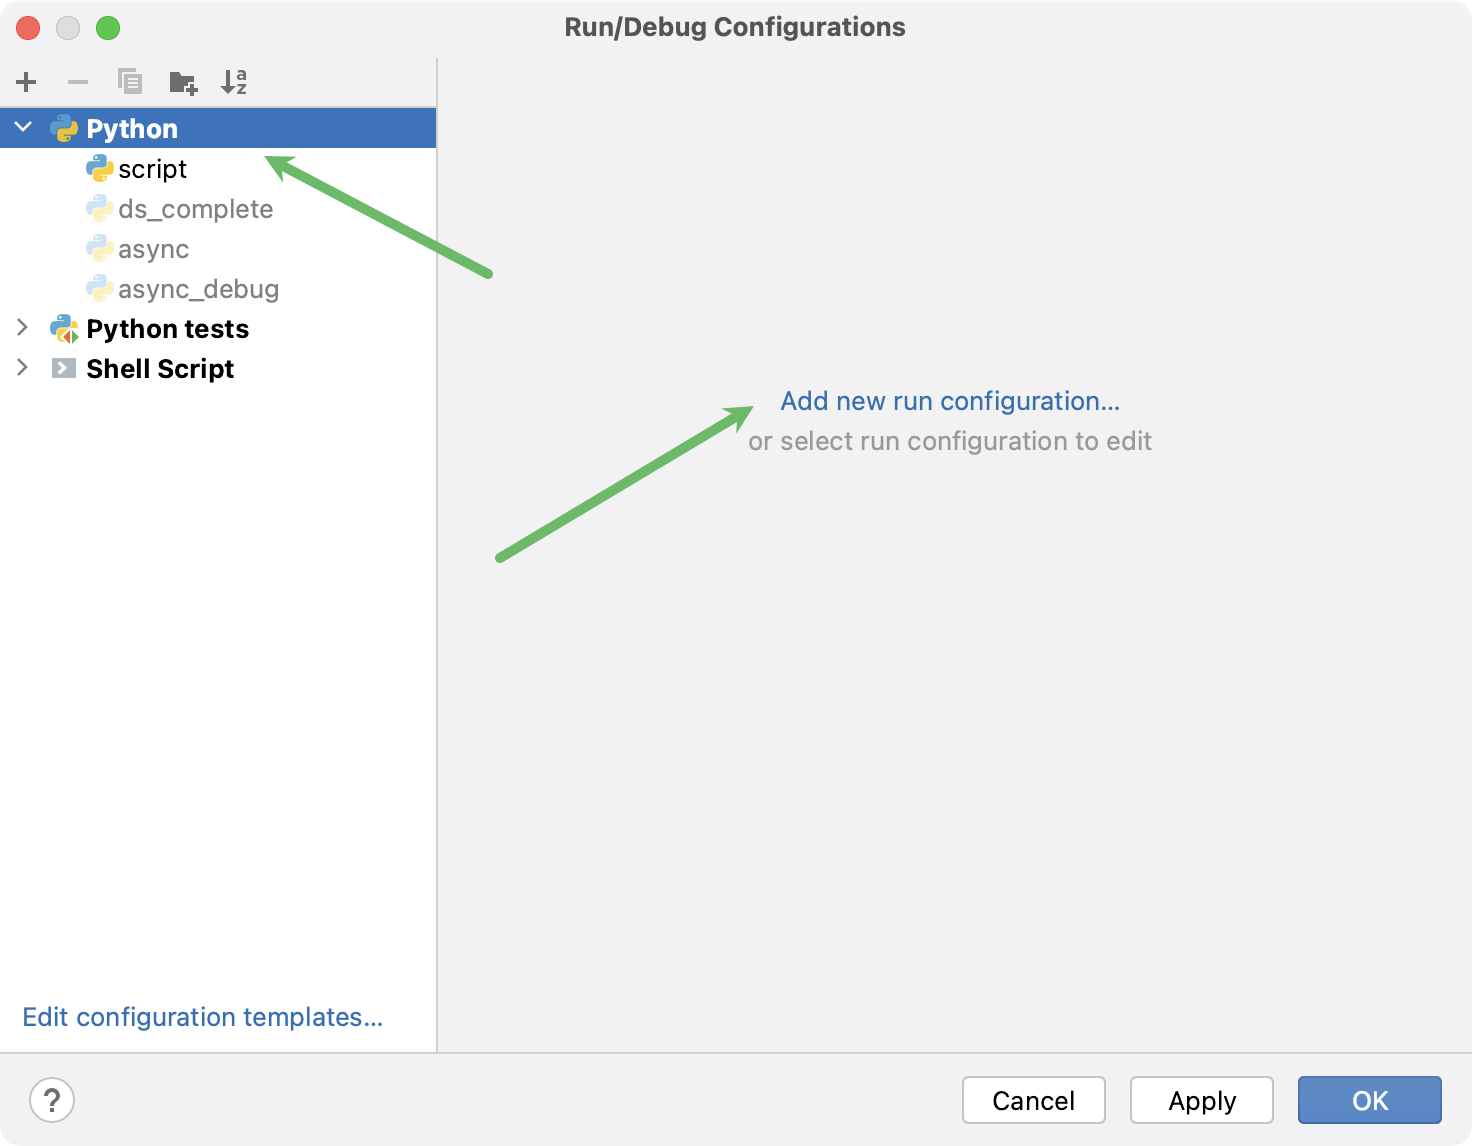 Creating a new run configuration